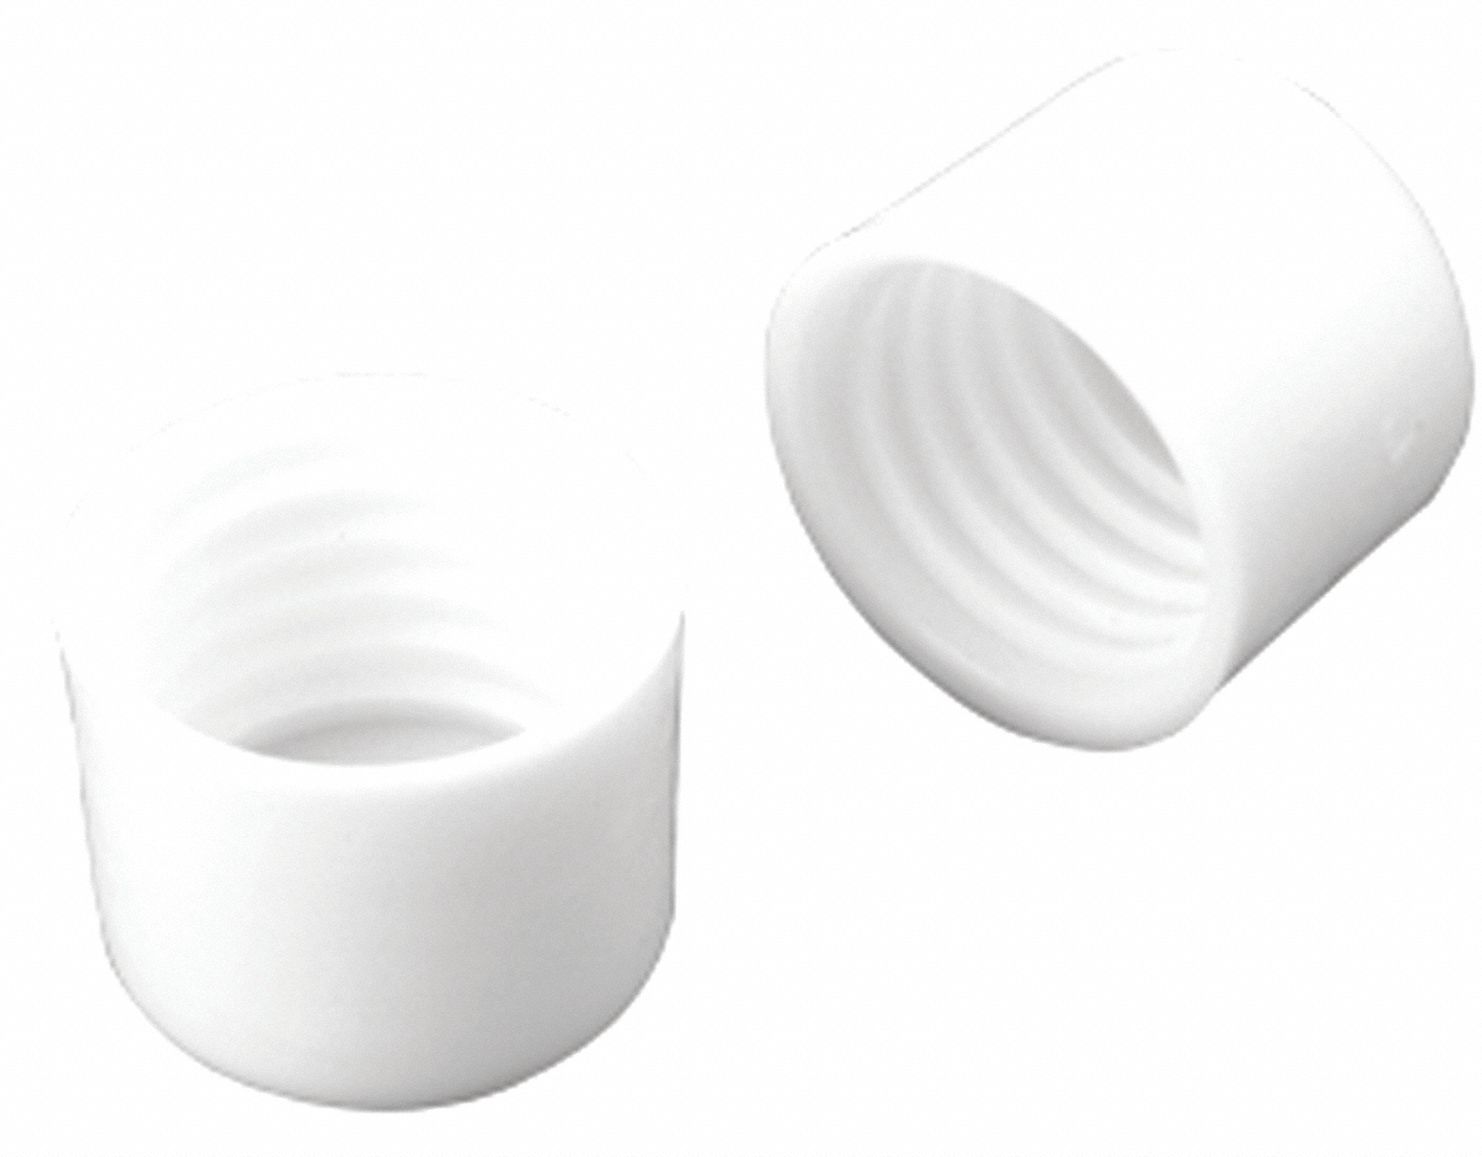 Closet Pole Cap: Plastic, 500 lb Load Capacity (Lb.), White, 1 1/4 in, 5.8 in, 2 PK